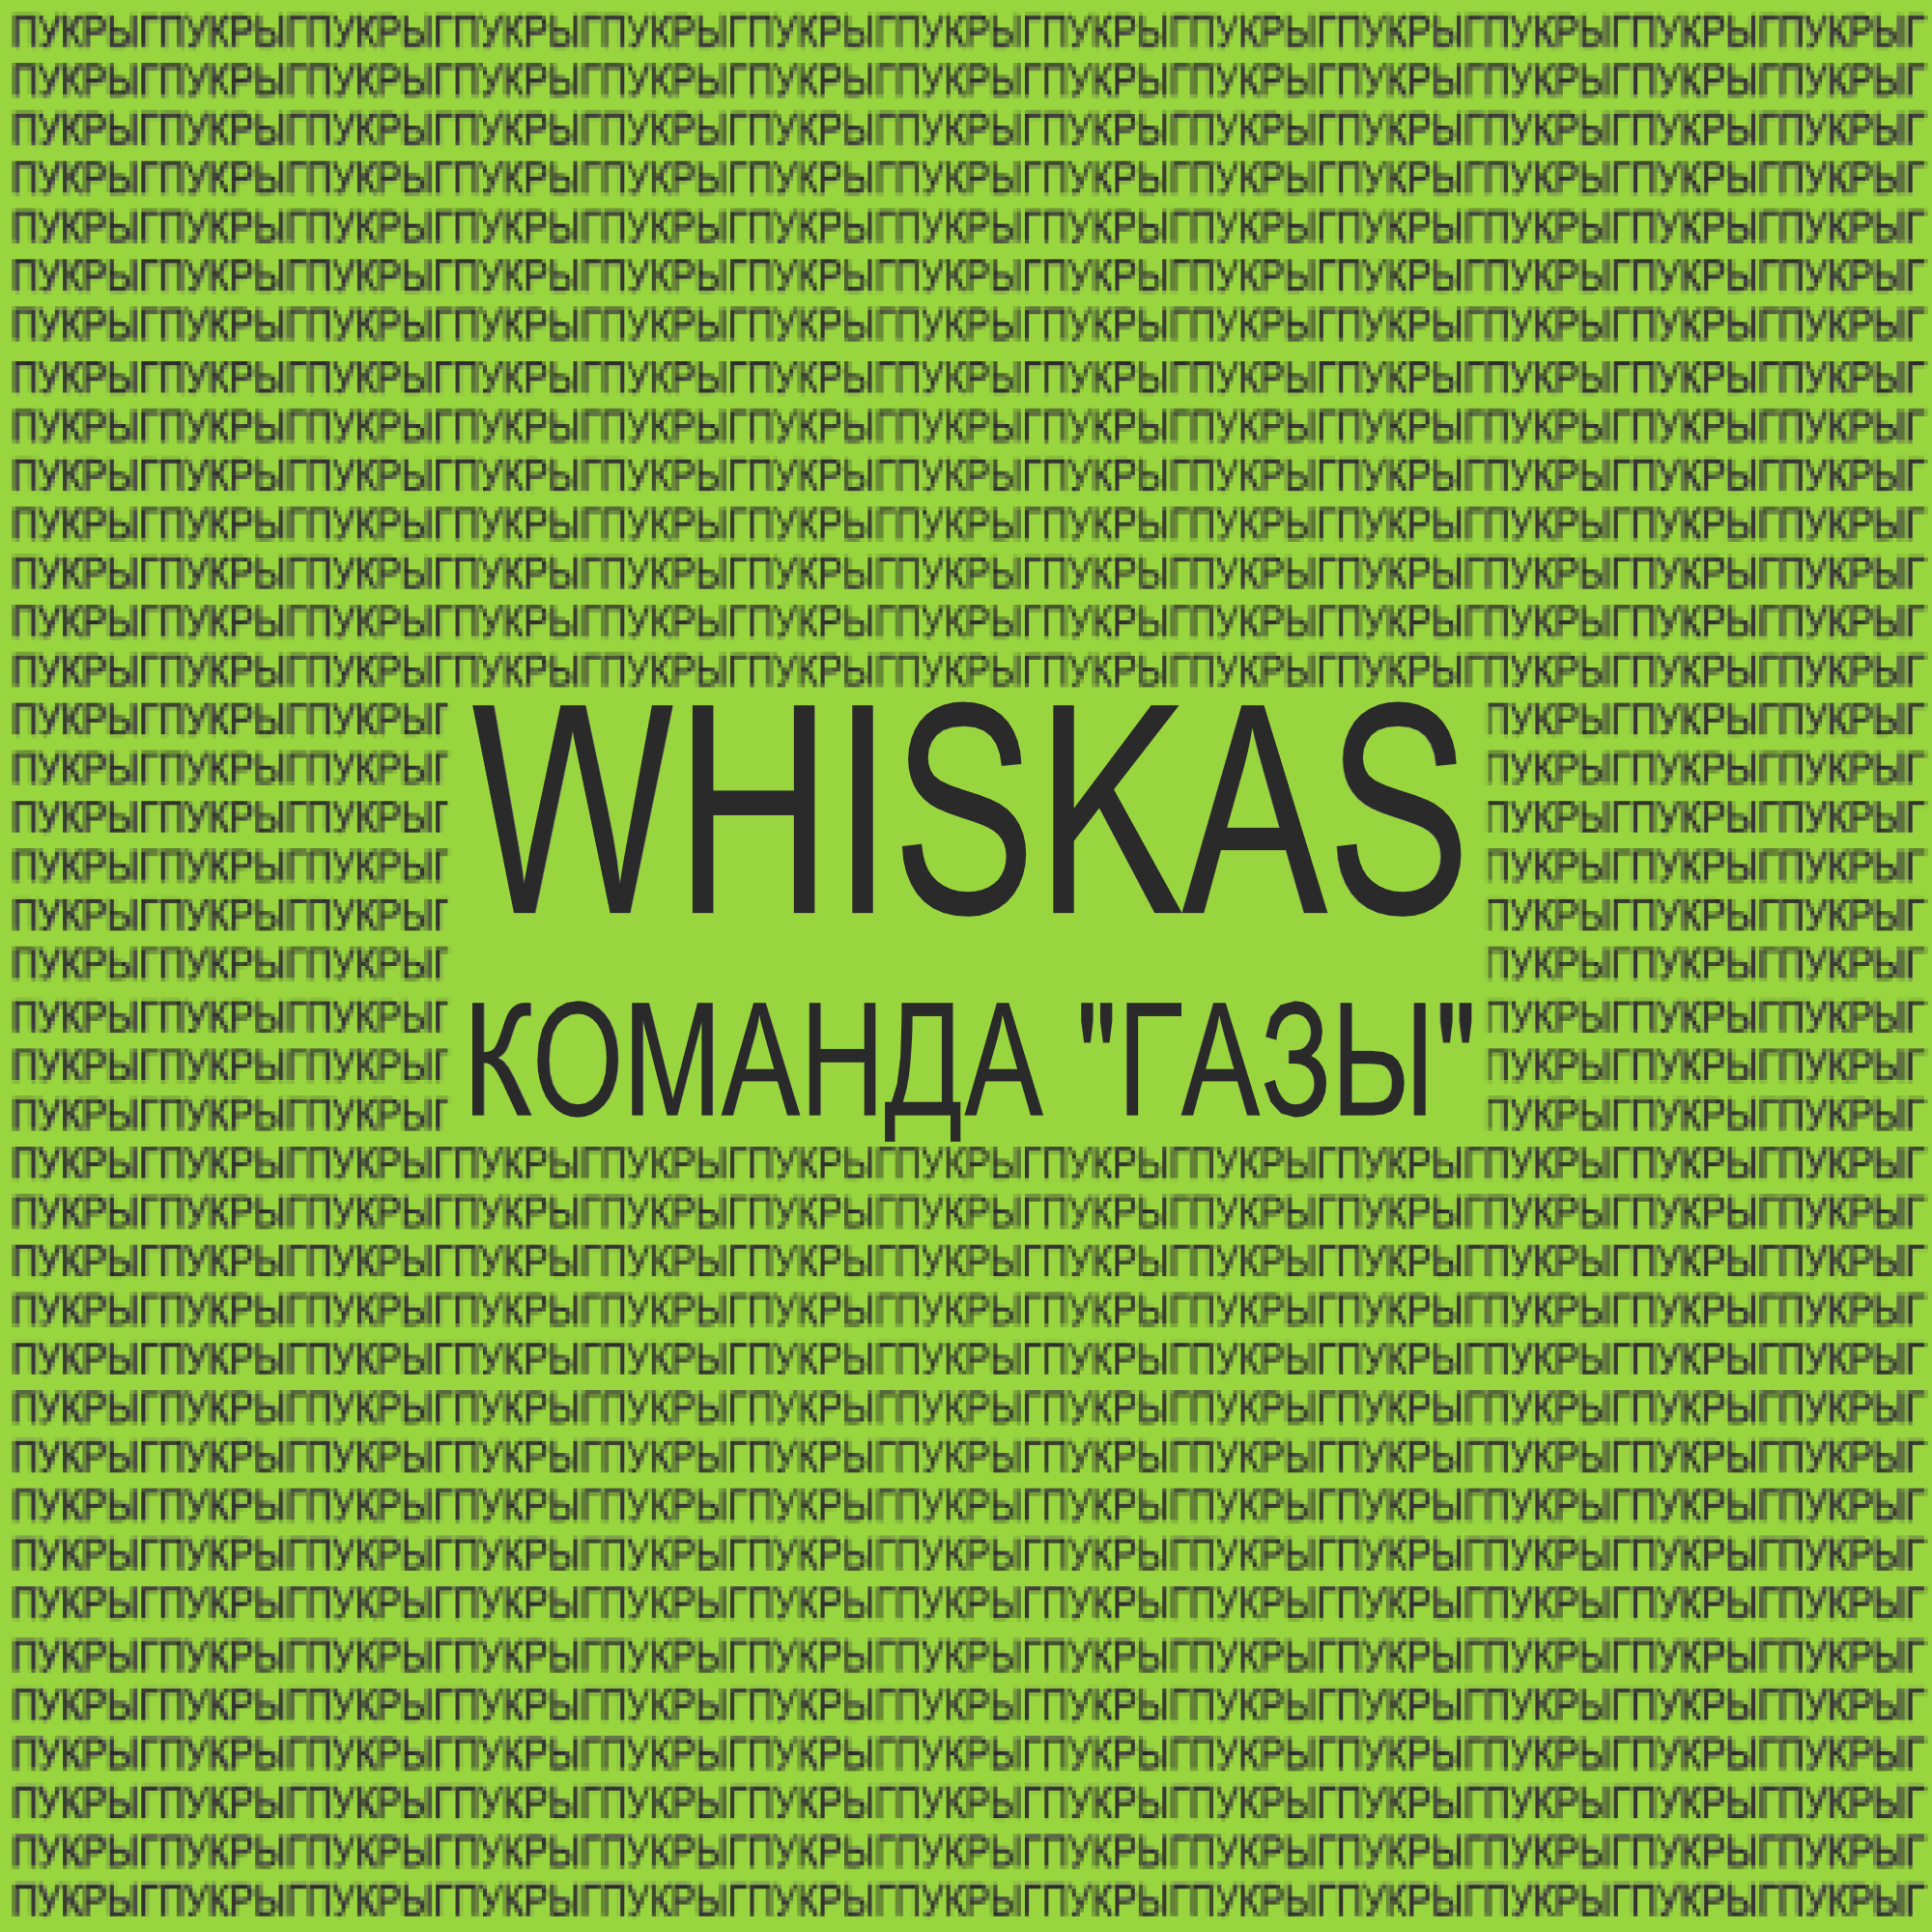 Whiskas — Команда &quot;Газы&quot; cover artwork